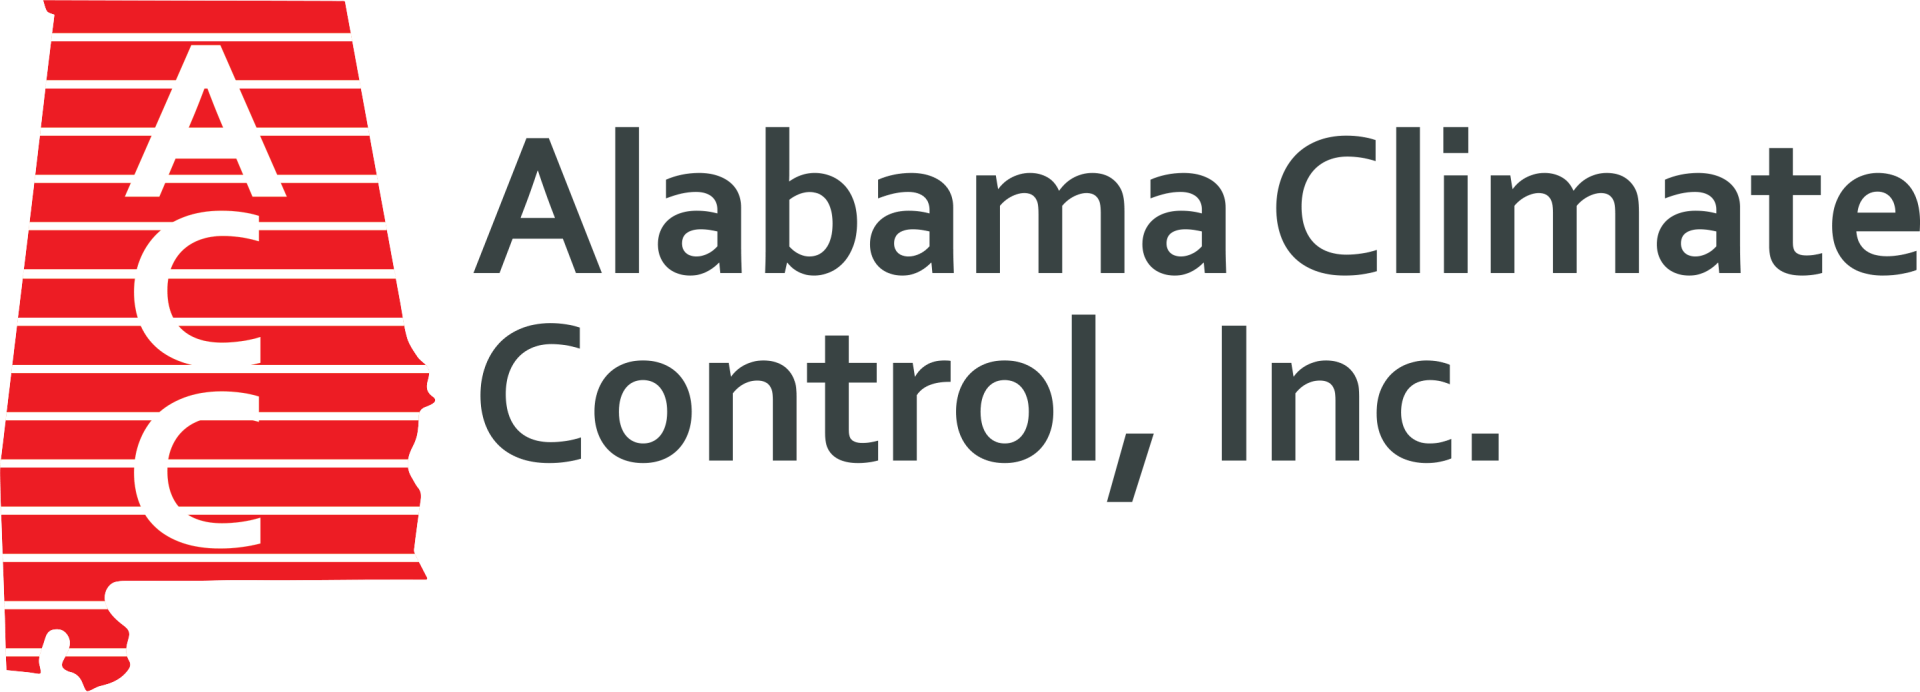 Alabama Climate Control, Inc. - logo